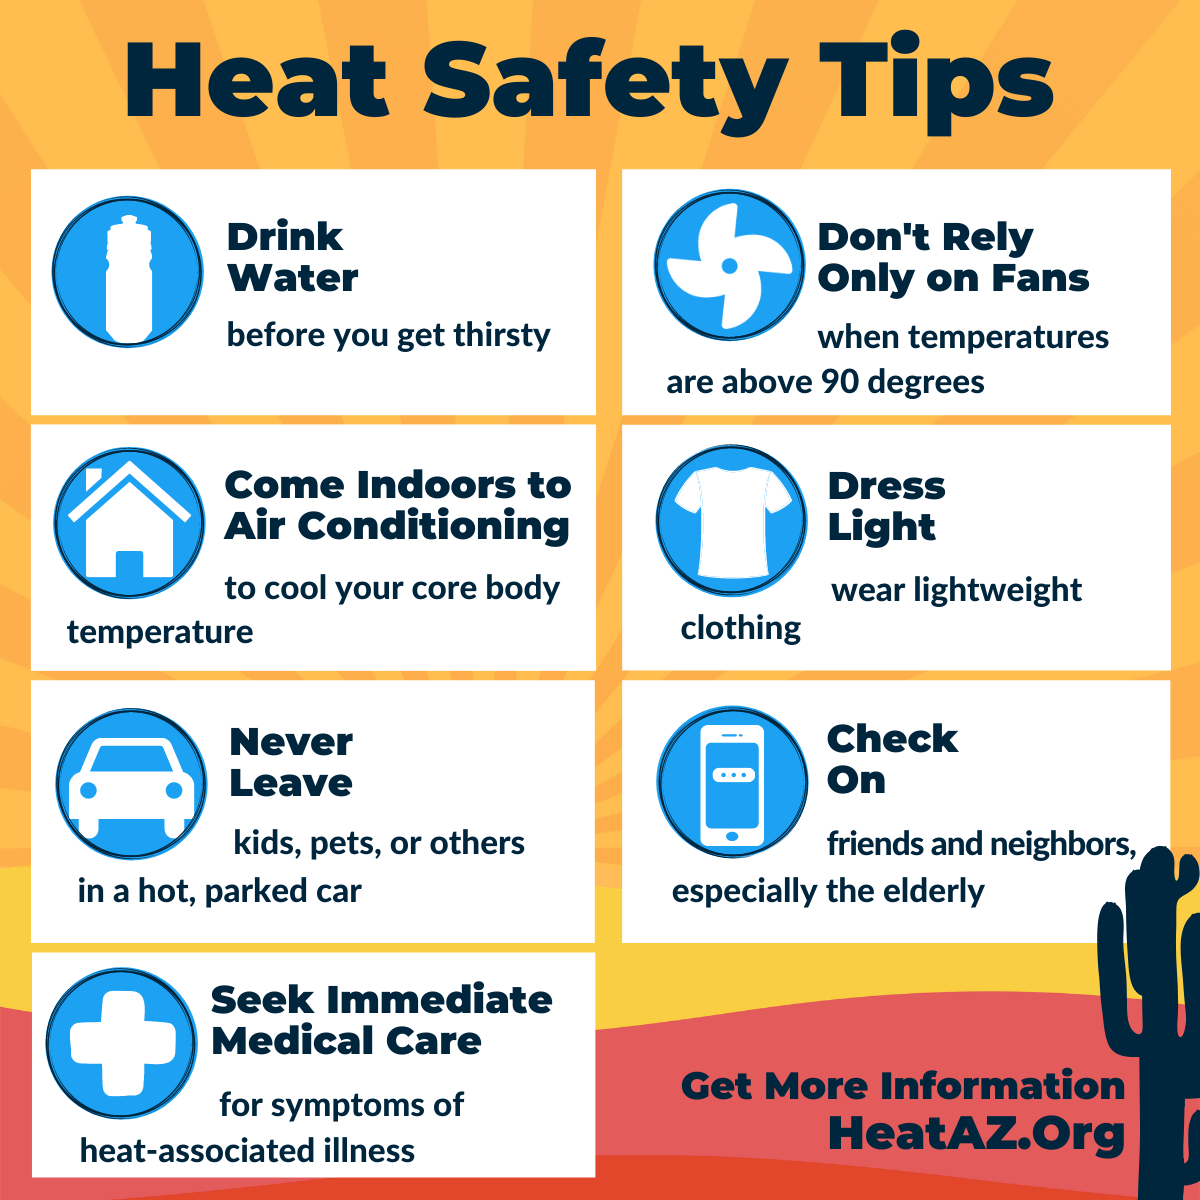 Heat & Safety Tips